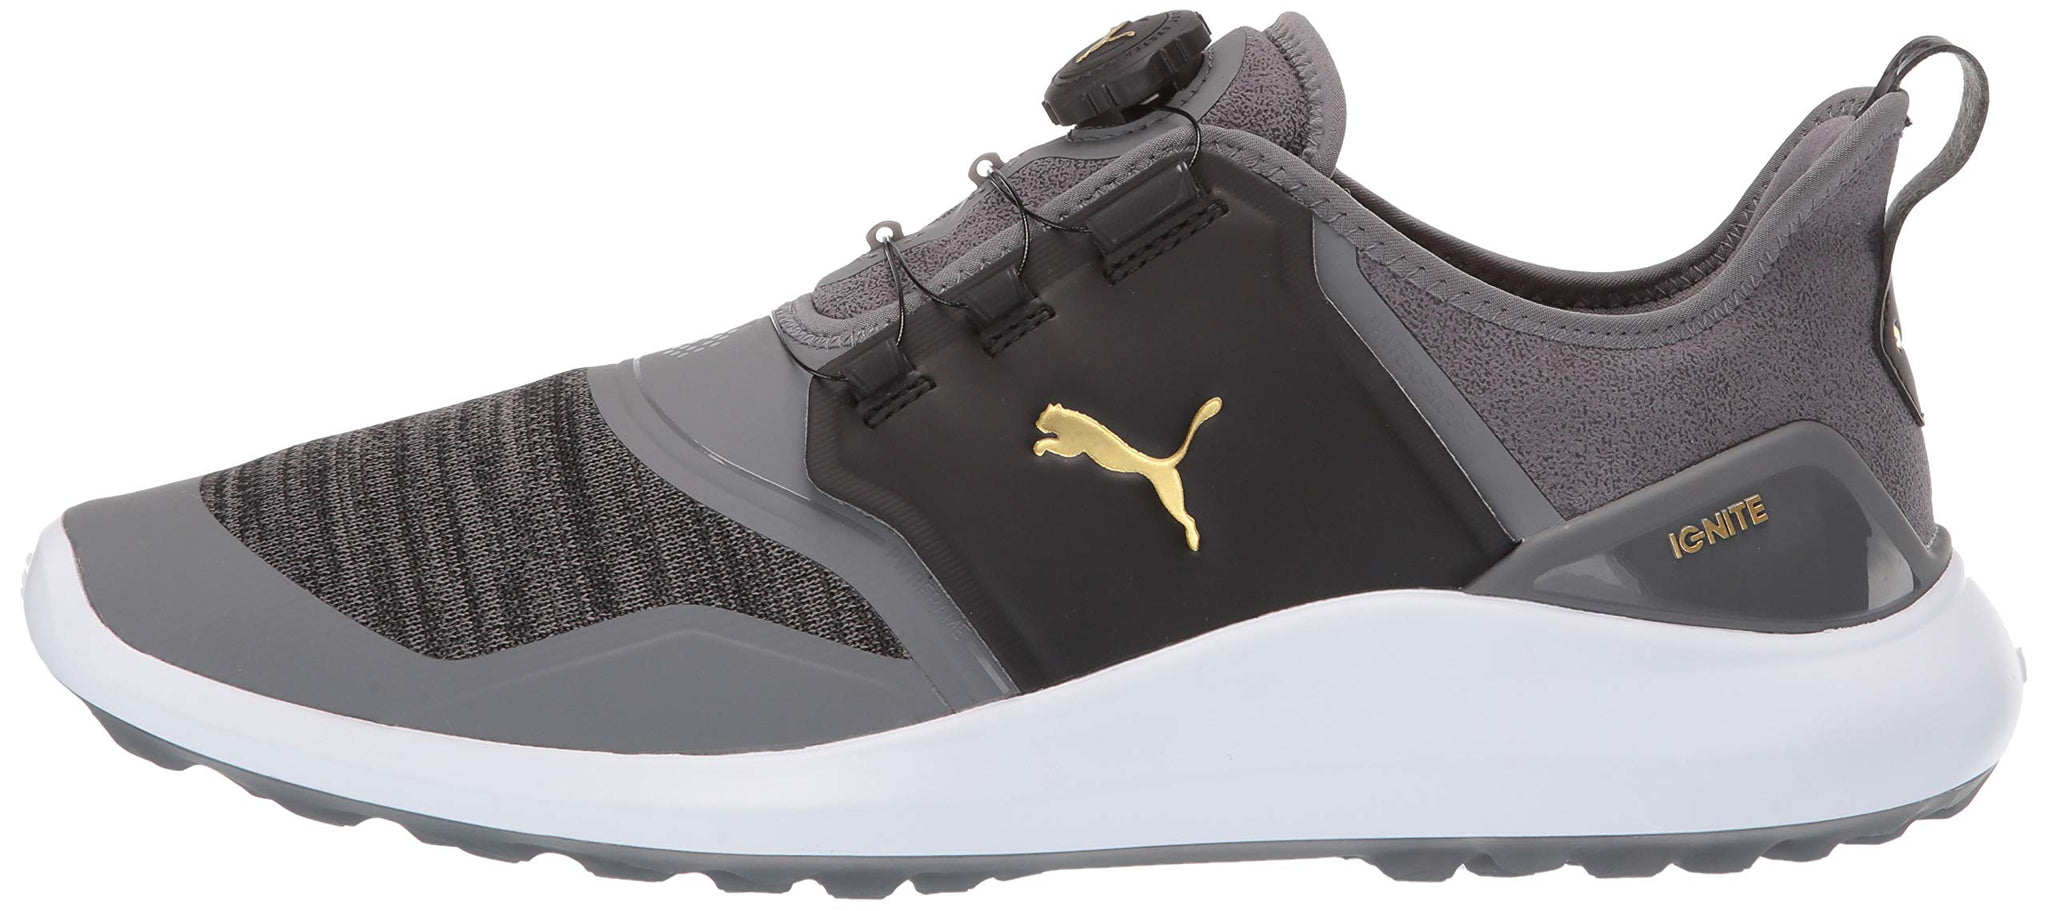 puma men's ignite nxt disc golf shoes